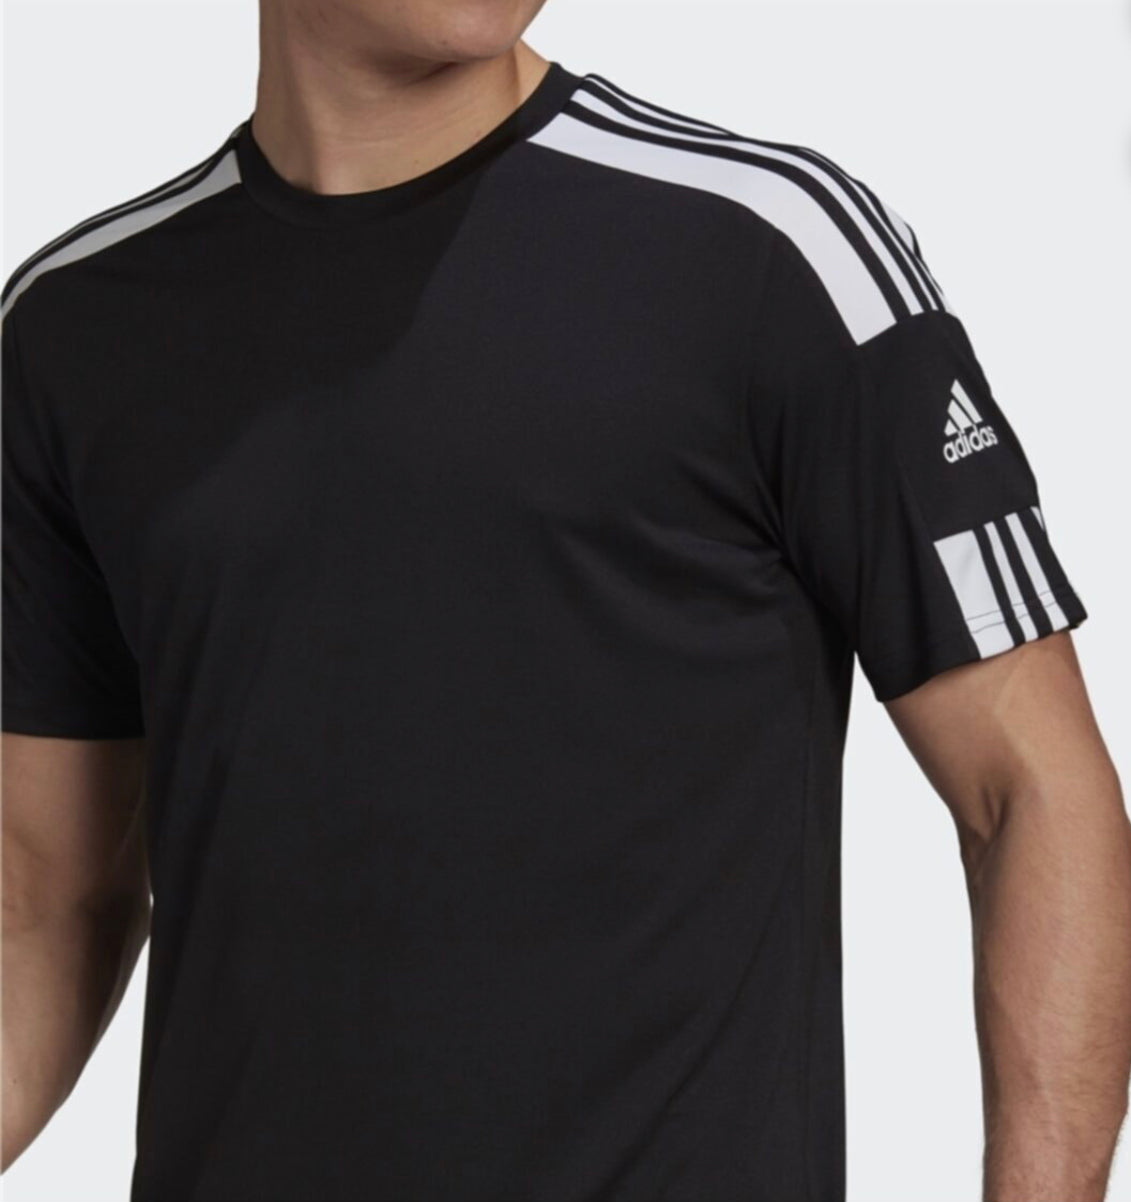 Adidas Football Short Sleeve T-Shirt Men